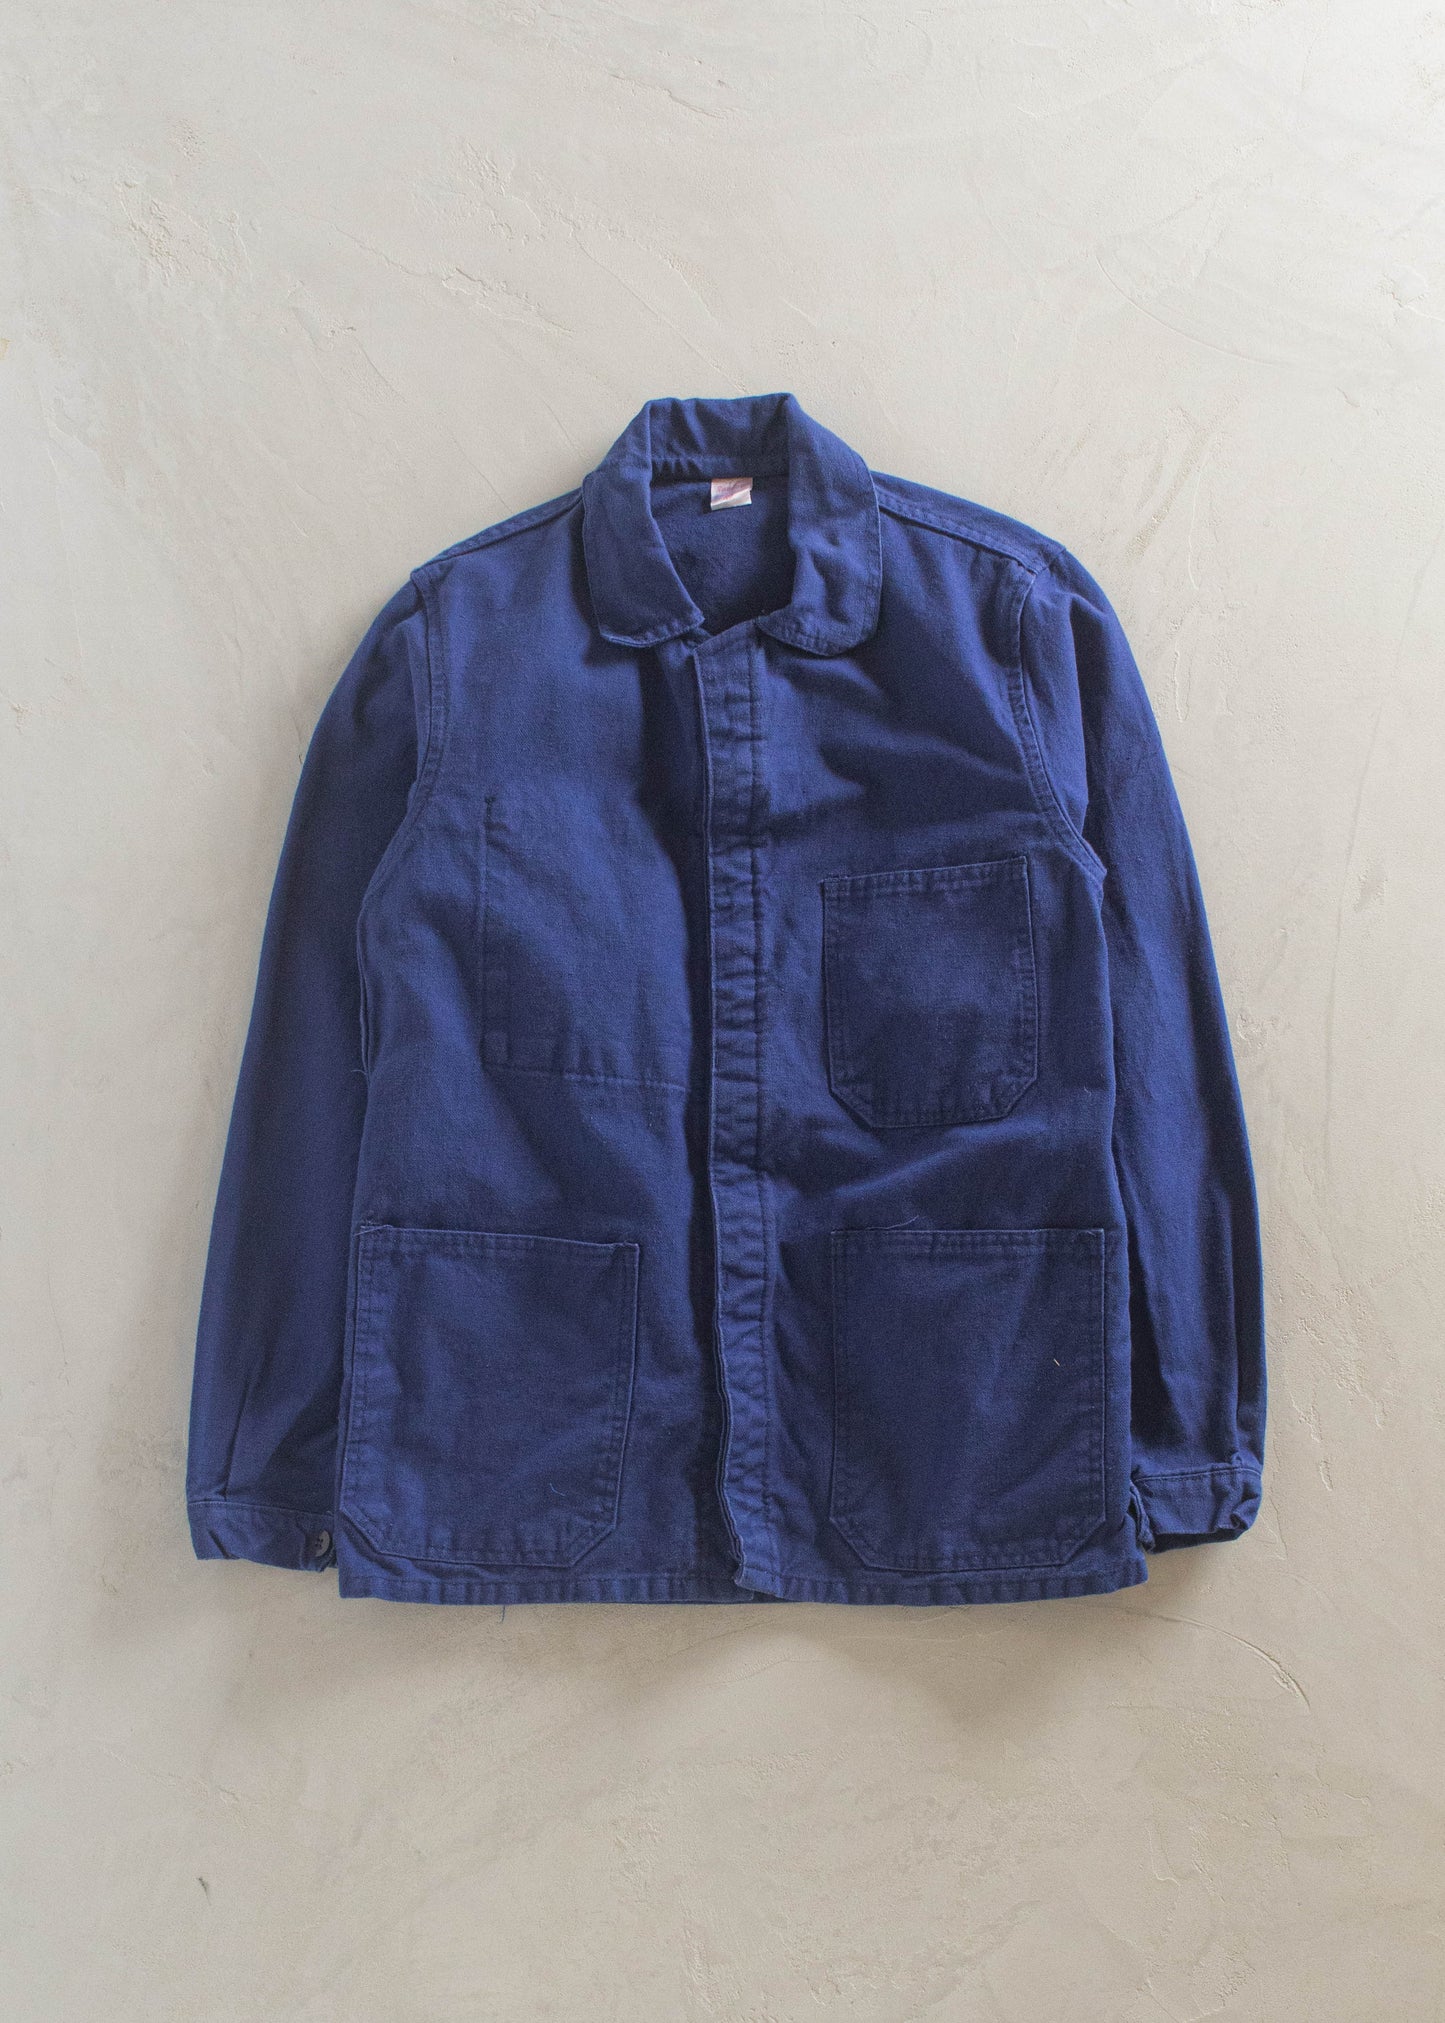 1980s Sanforized French Workwear Chore Jacket Size 2XS/XS